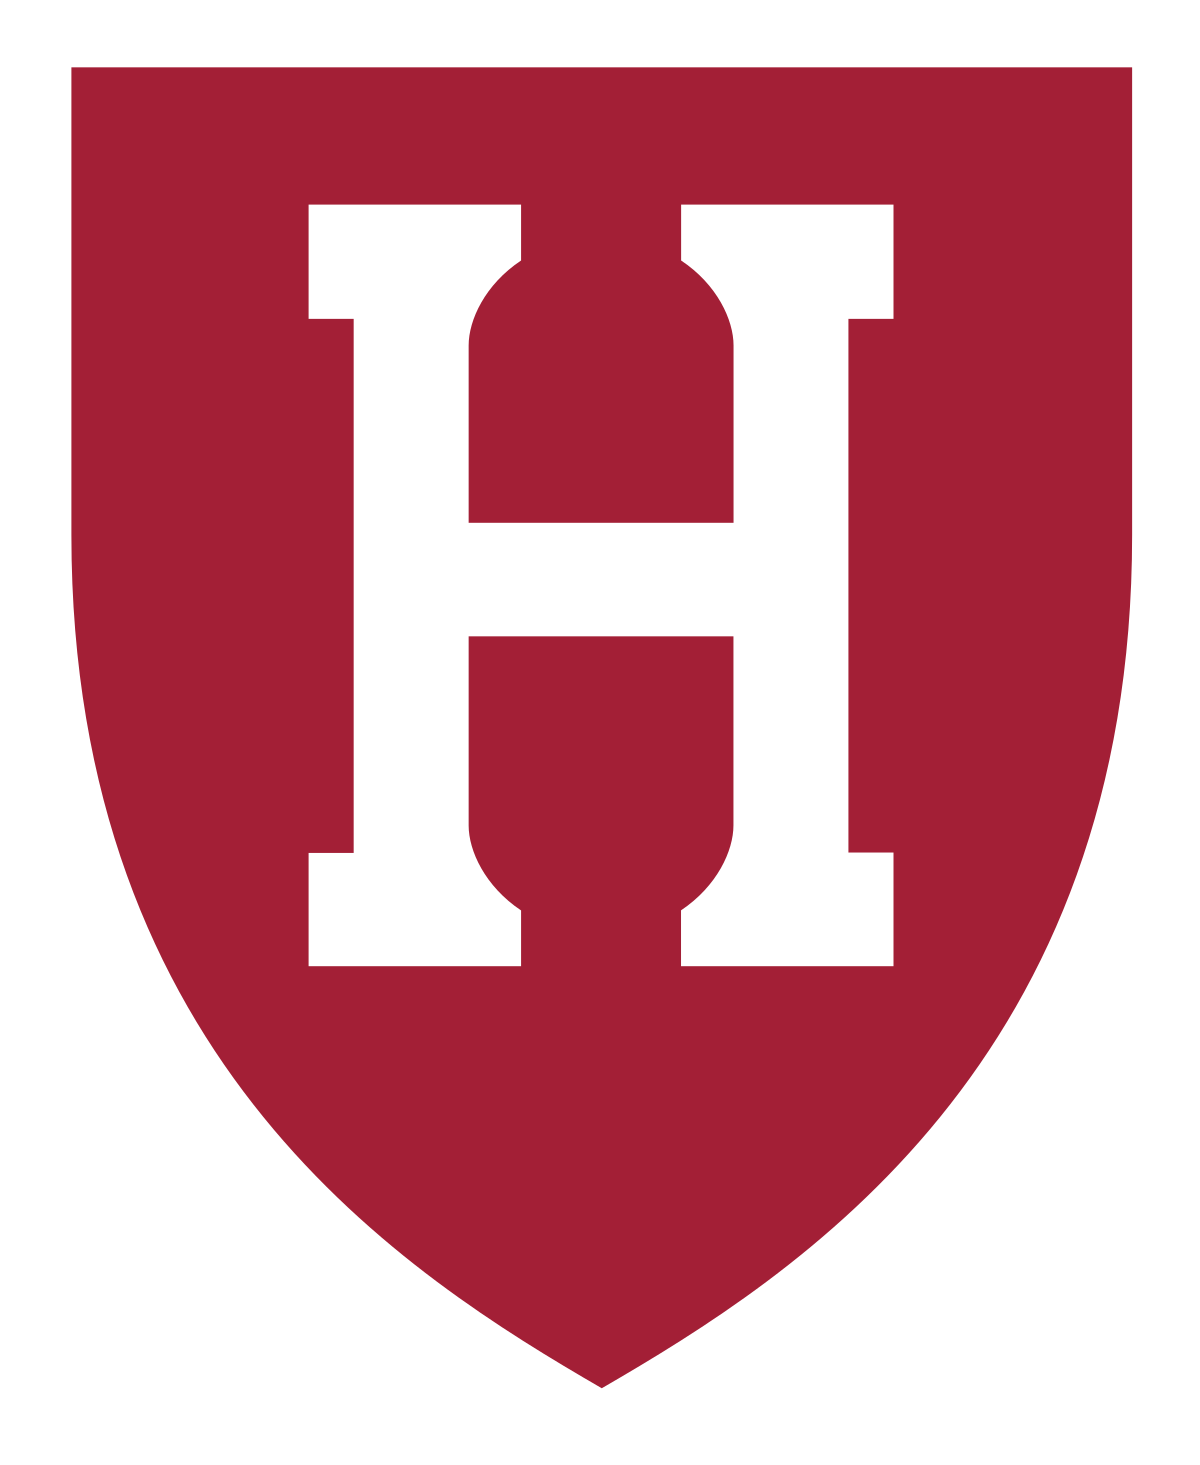 Harvard logo